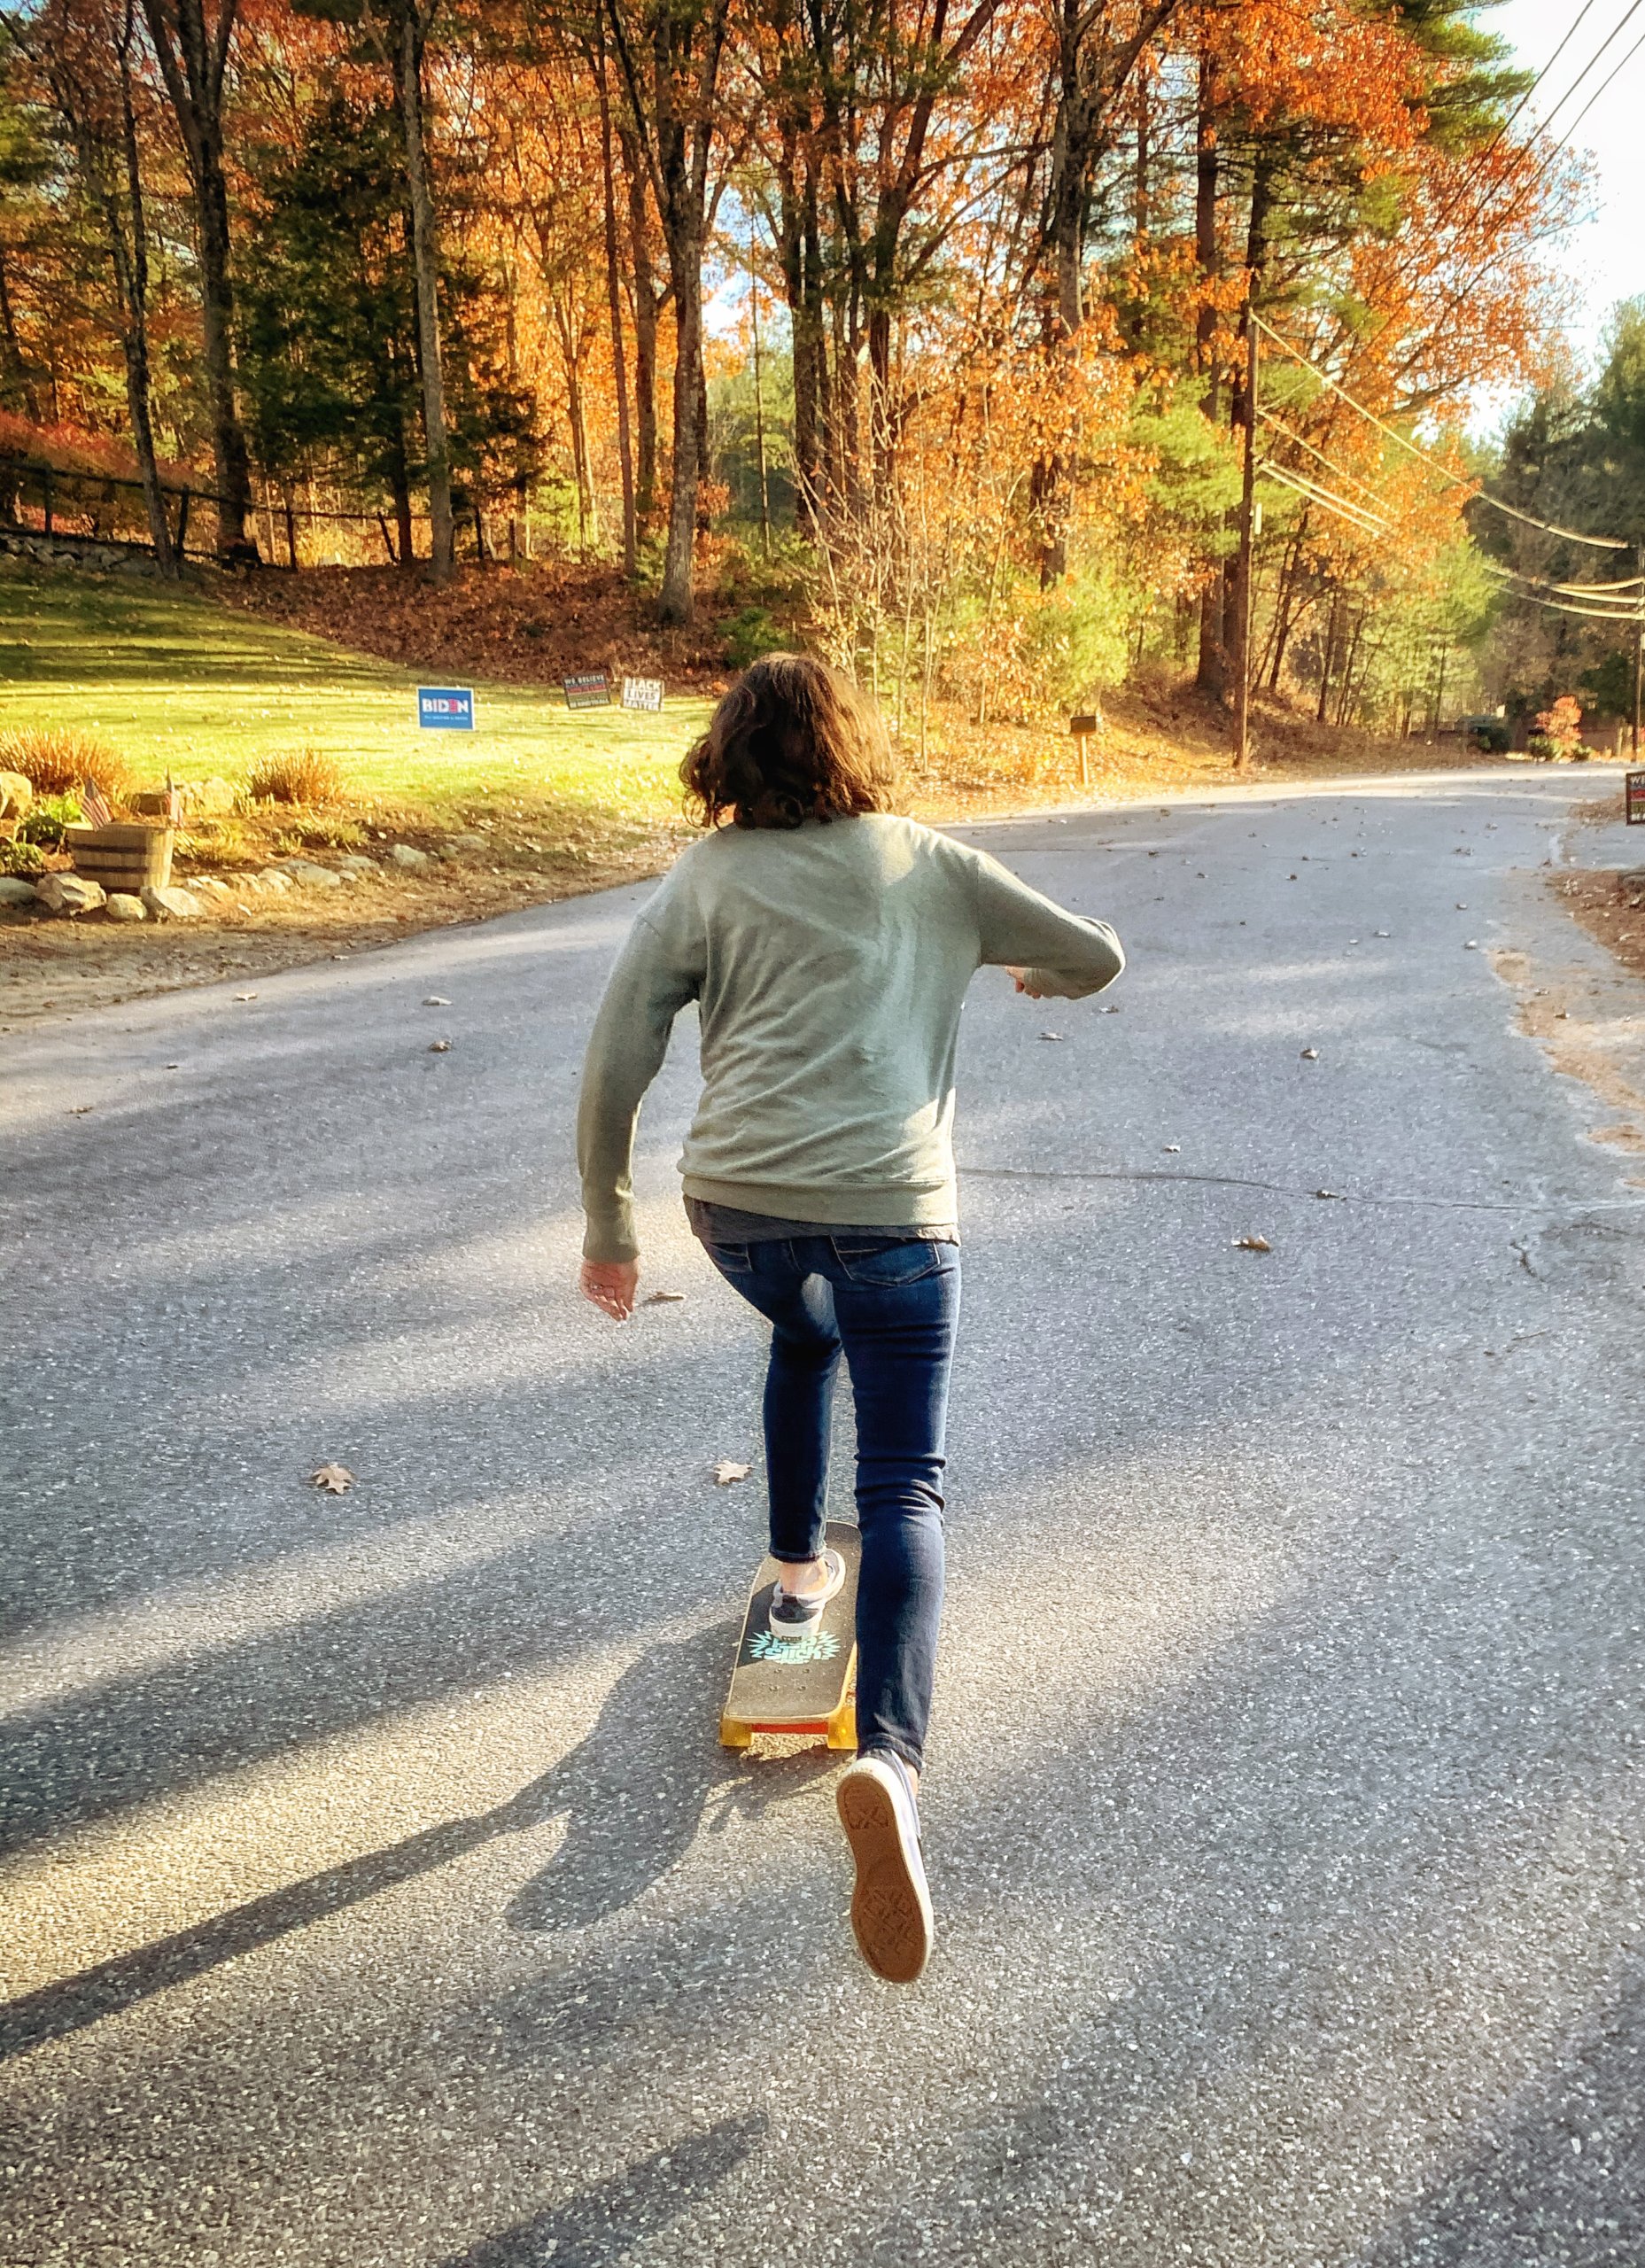 PomPom Skateboards co-founder Sarah Cameron pushing on skateboard.